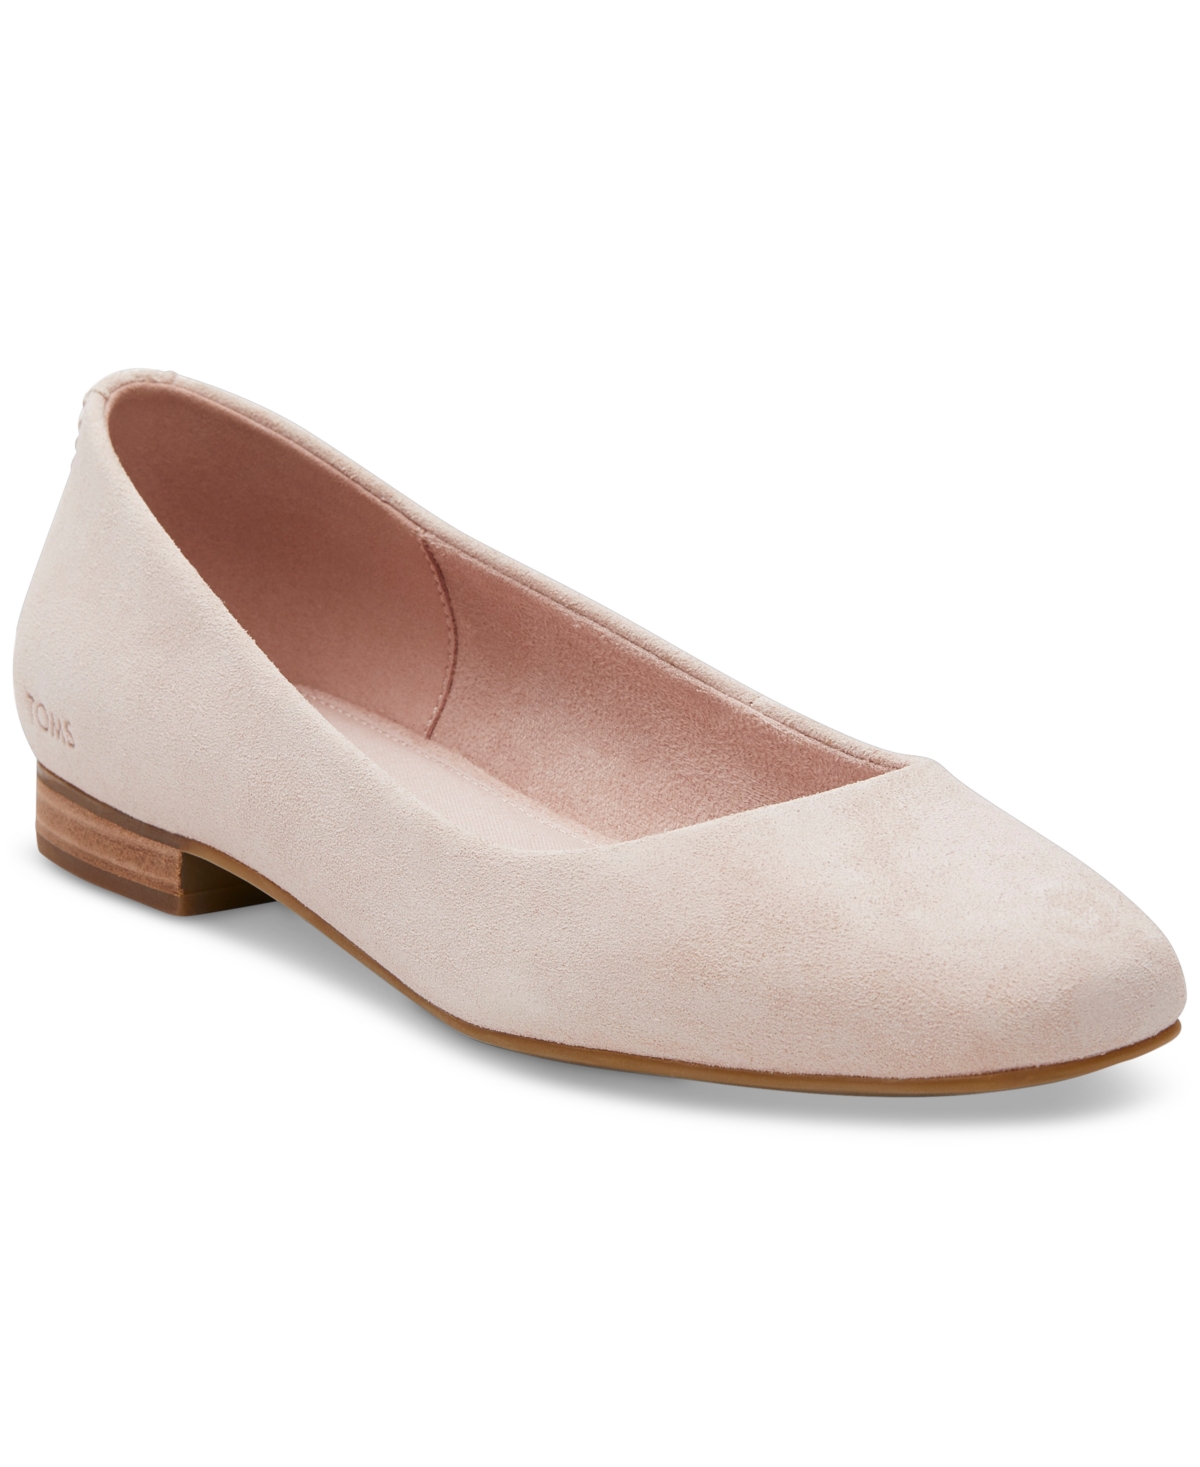 Women's Briella Square-Toe Slip-On Ballet Flats - Light Gold Metallic Leather